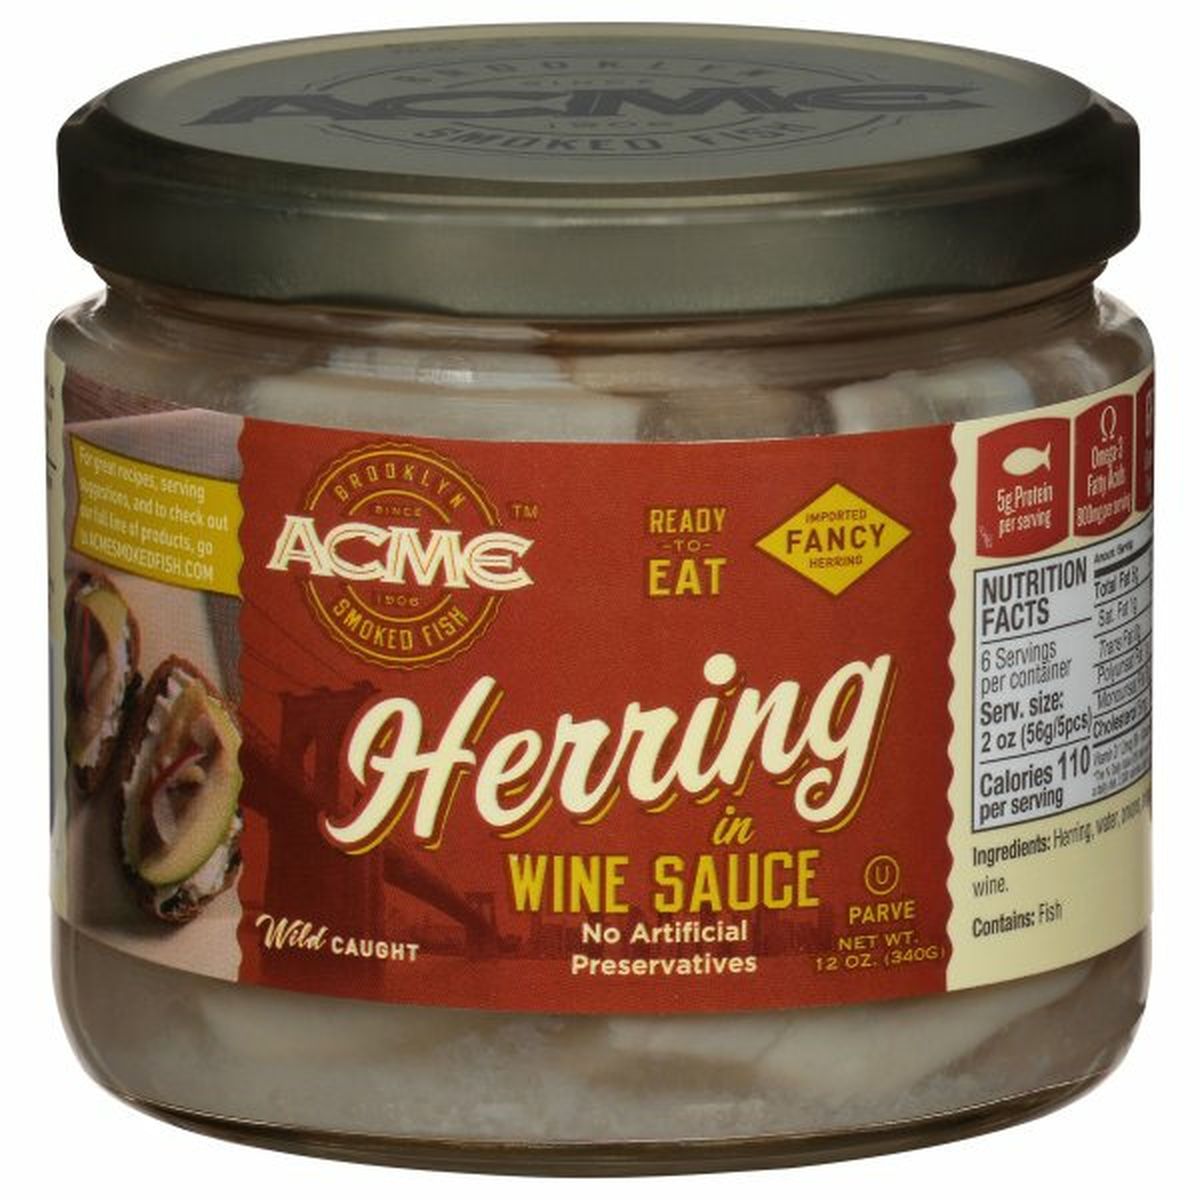 Calories in Acme Herring in Wine Sauce